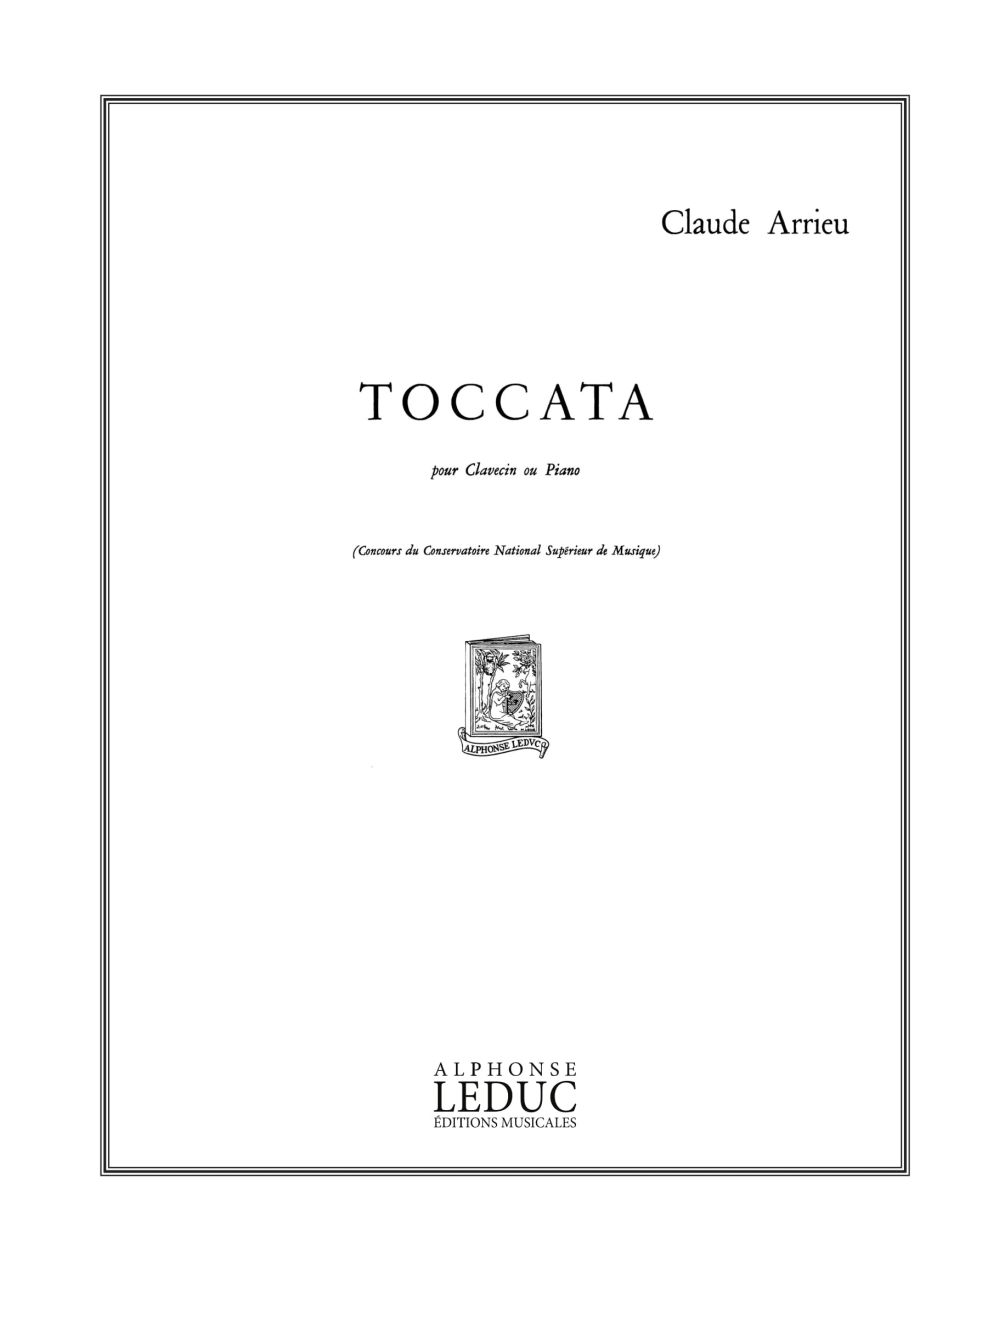 Claude Arrieu: Claude Arrieu: Toccata: Piano or Harpsichord: Score